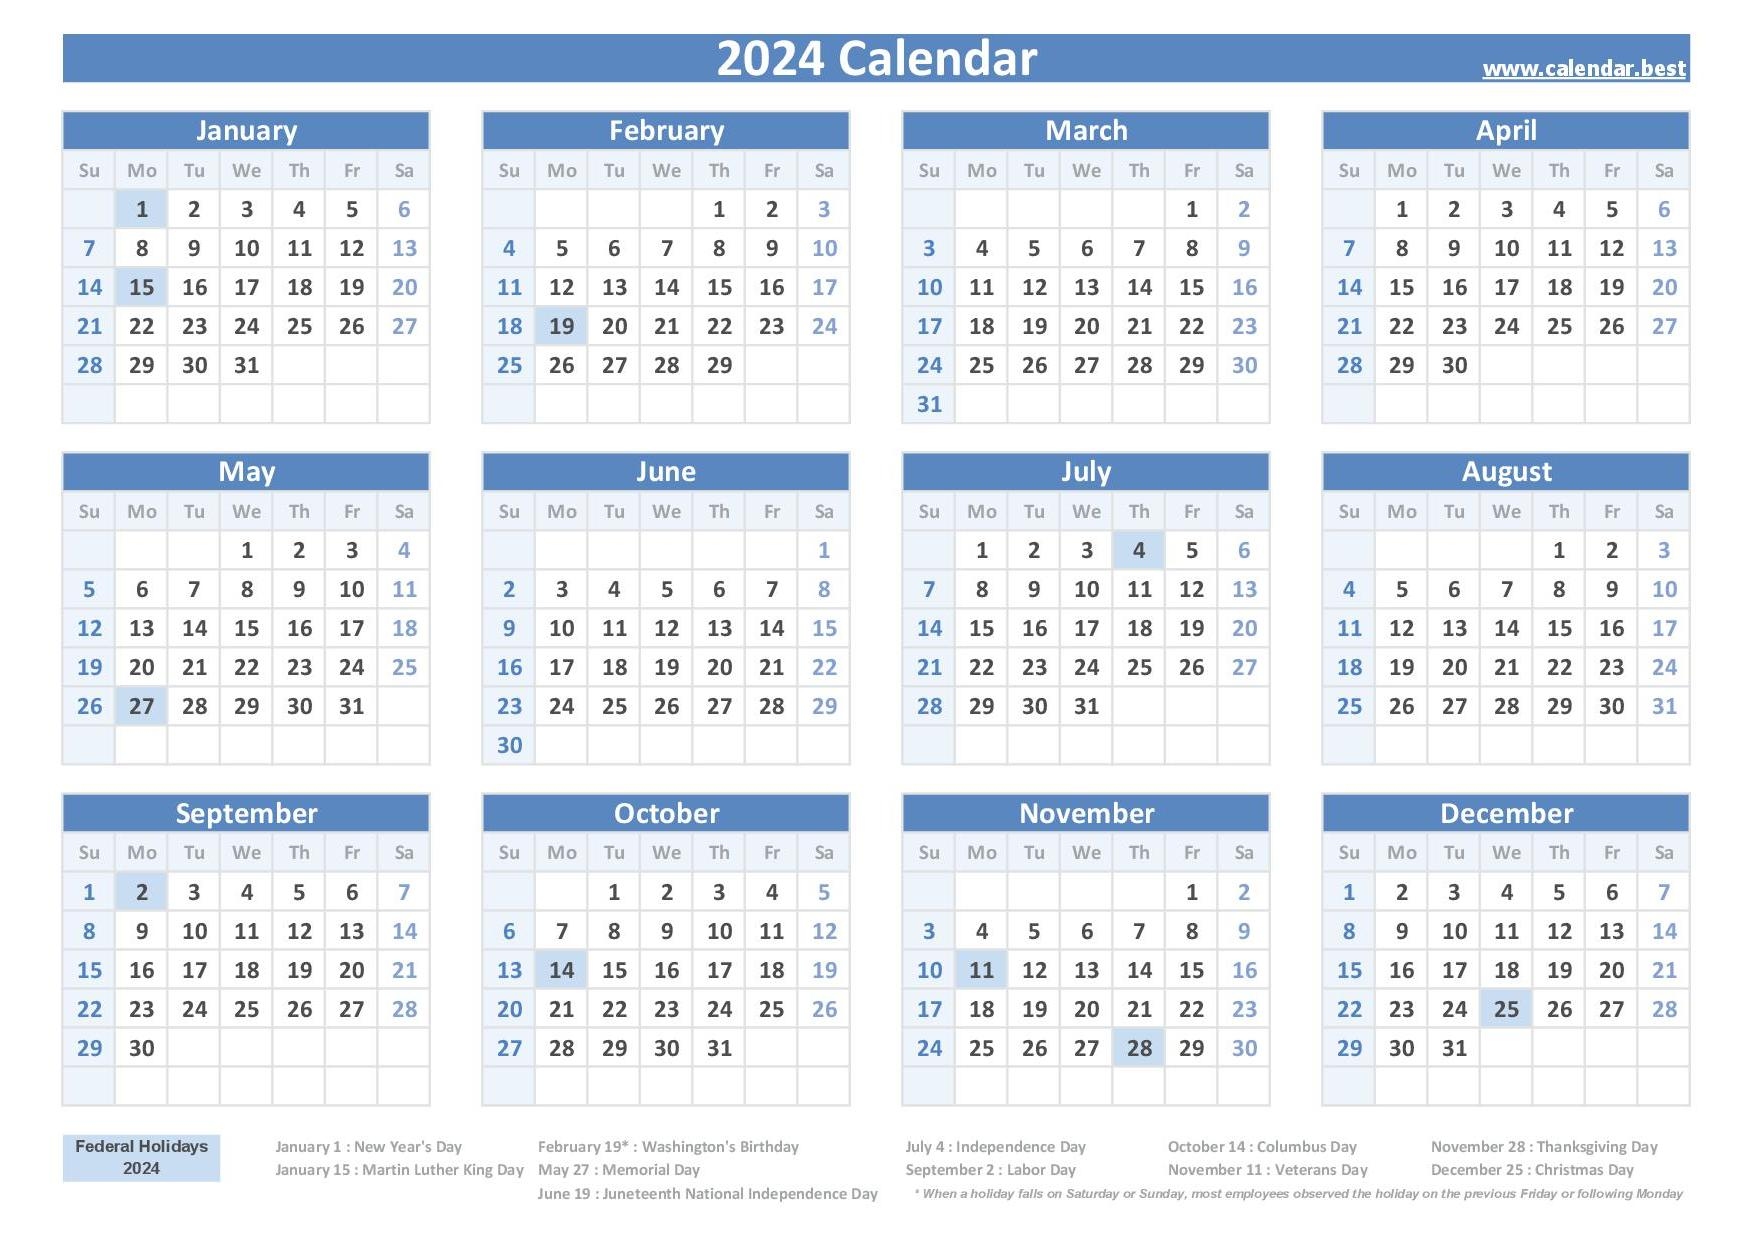 2024 Us Federal Holiday Calendar Printable Bill Marjie - Free Printable 2024 Calendar With Holidays Usa Printable